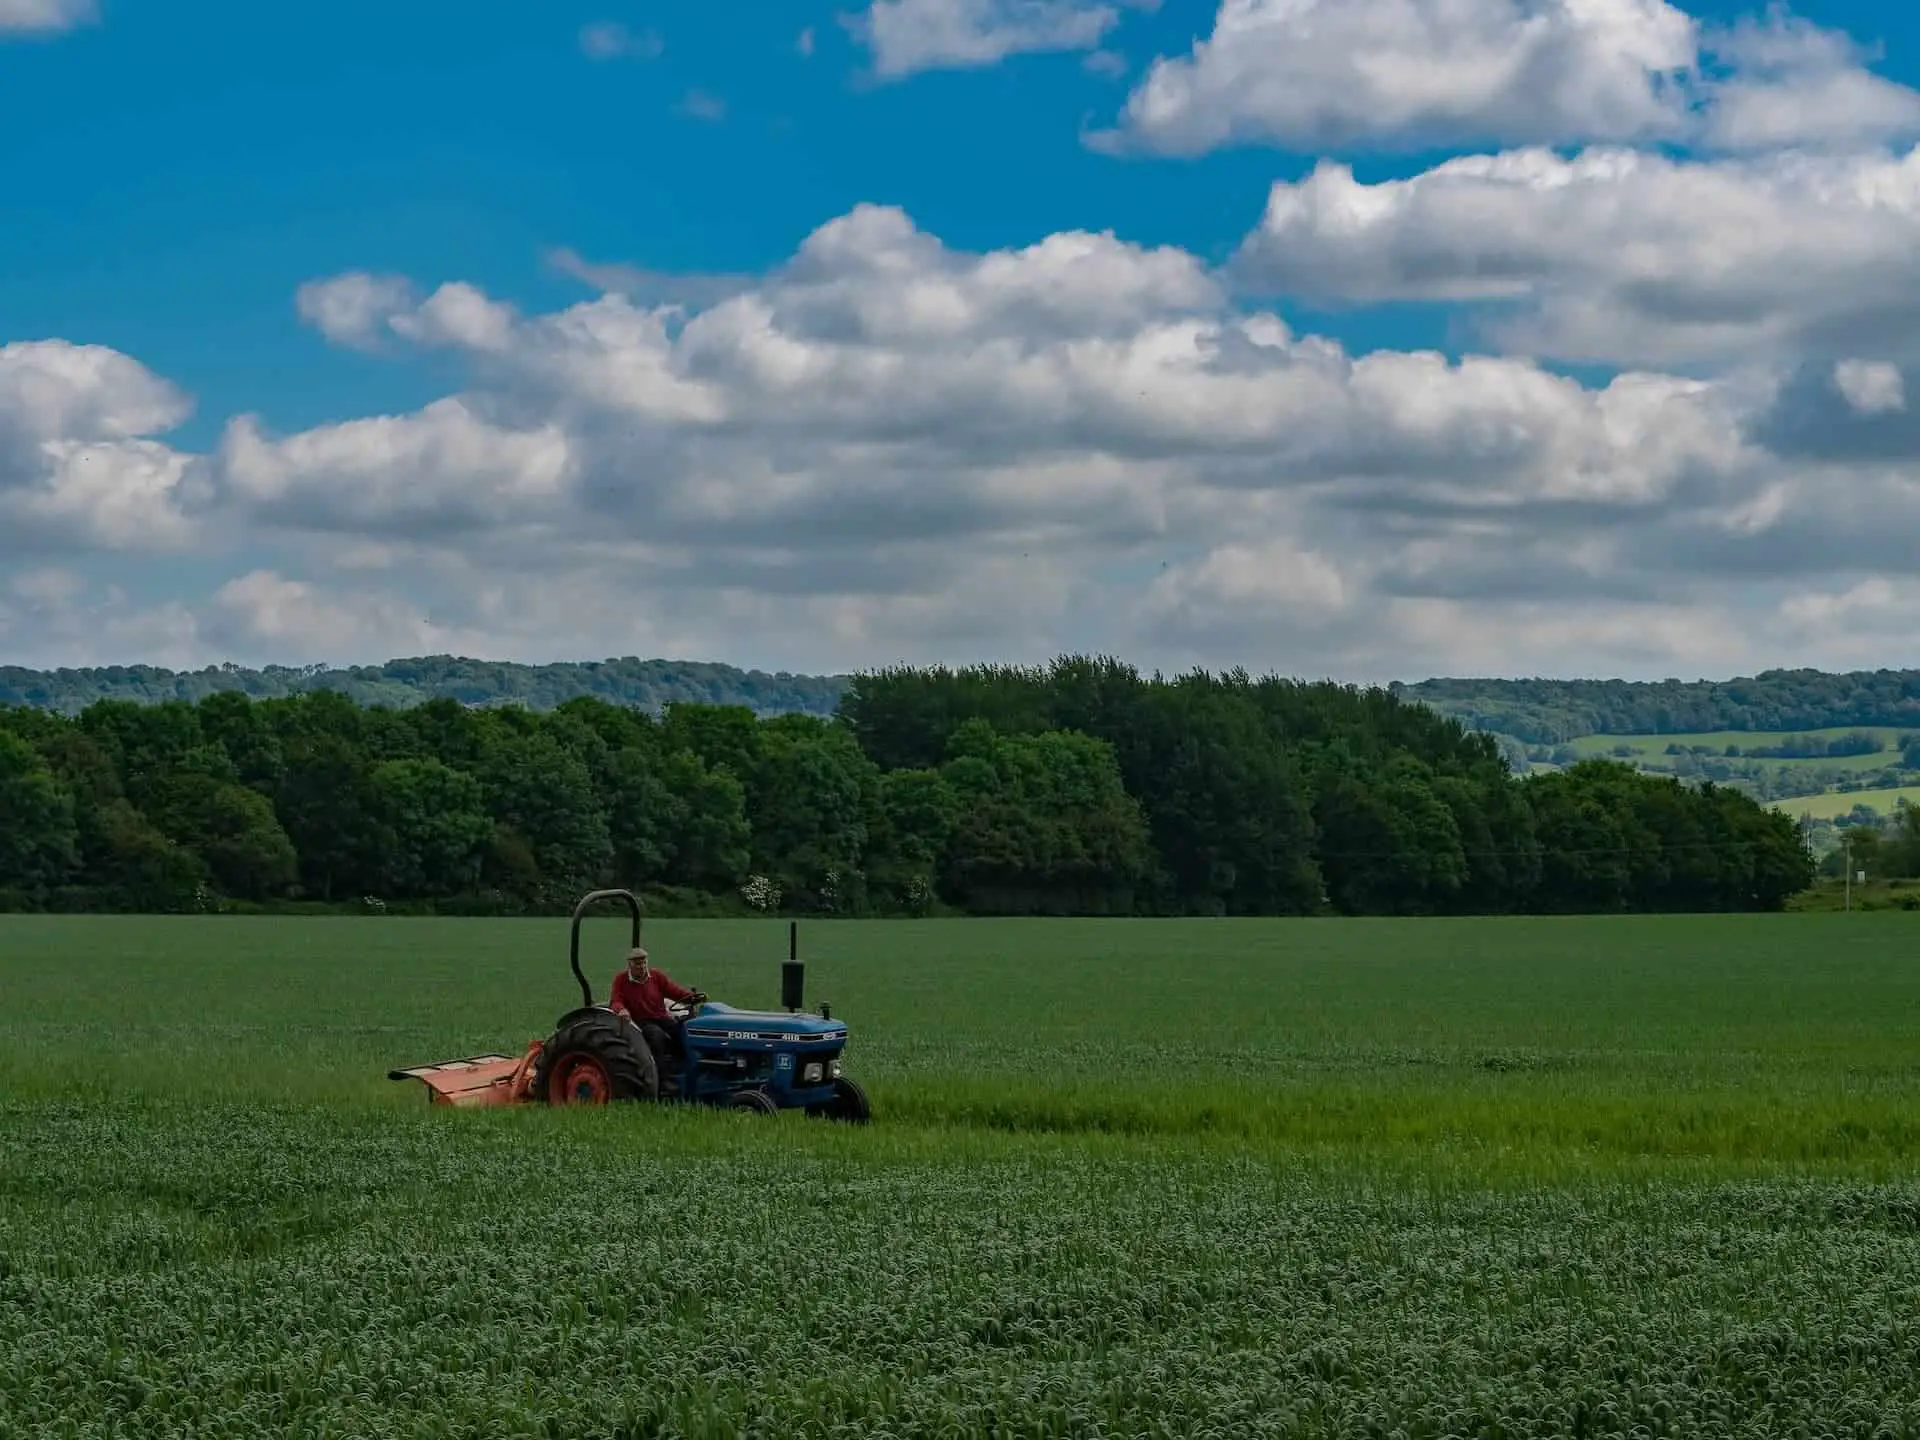 Farmer on tractor in field of produce